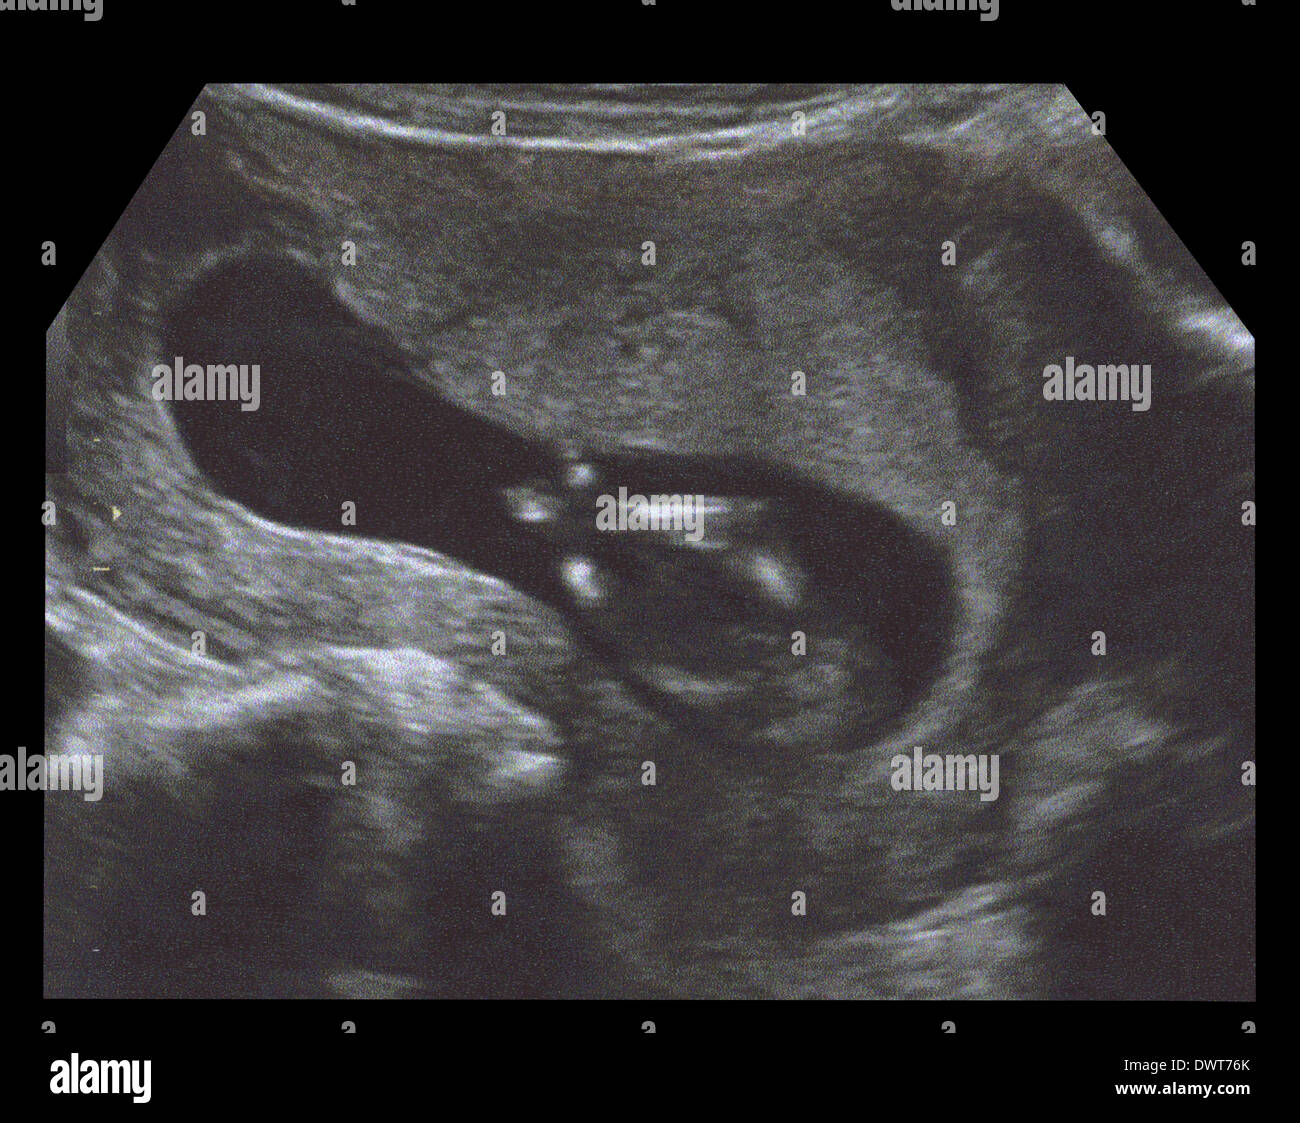 Fetus ultrasound scan Stock Photo - Alamy